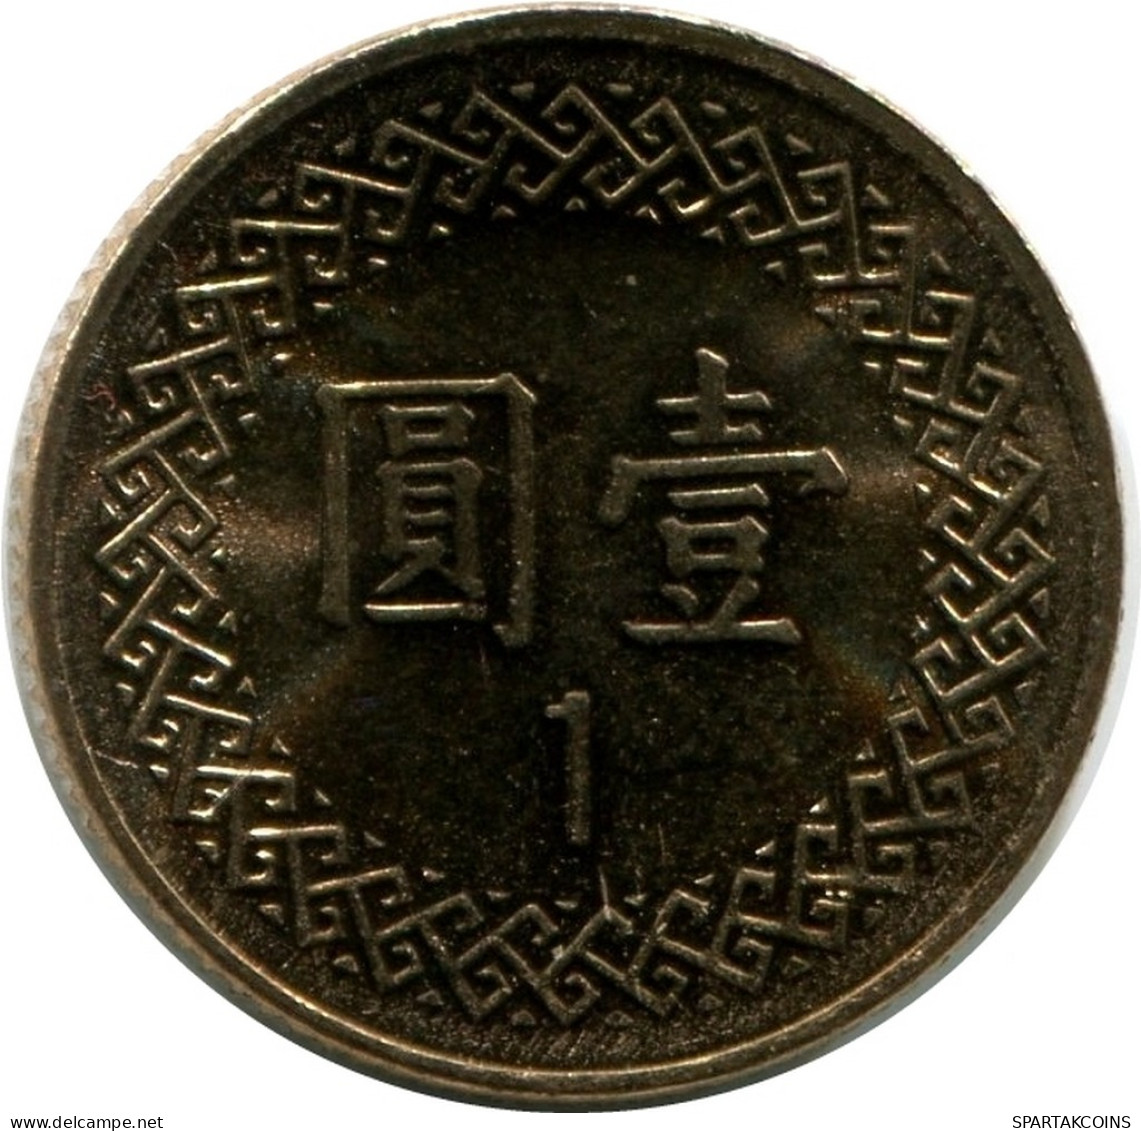 1 YUAN 1996 TAIWAN UNC Coin #M10414.U - Taiwan